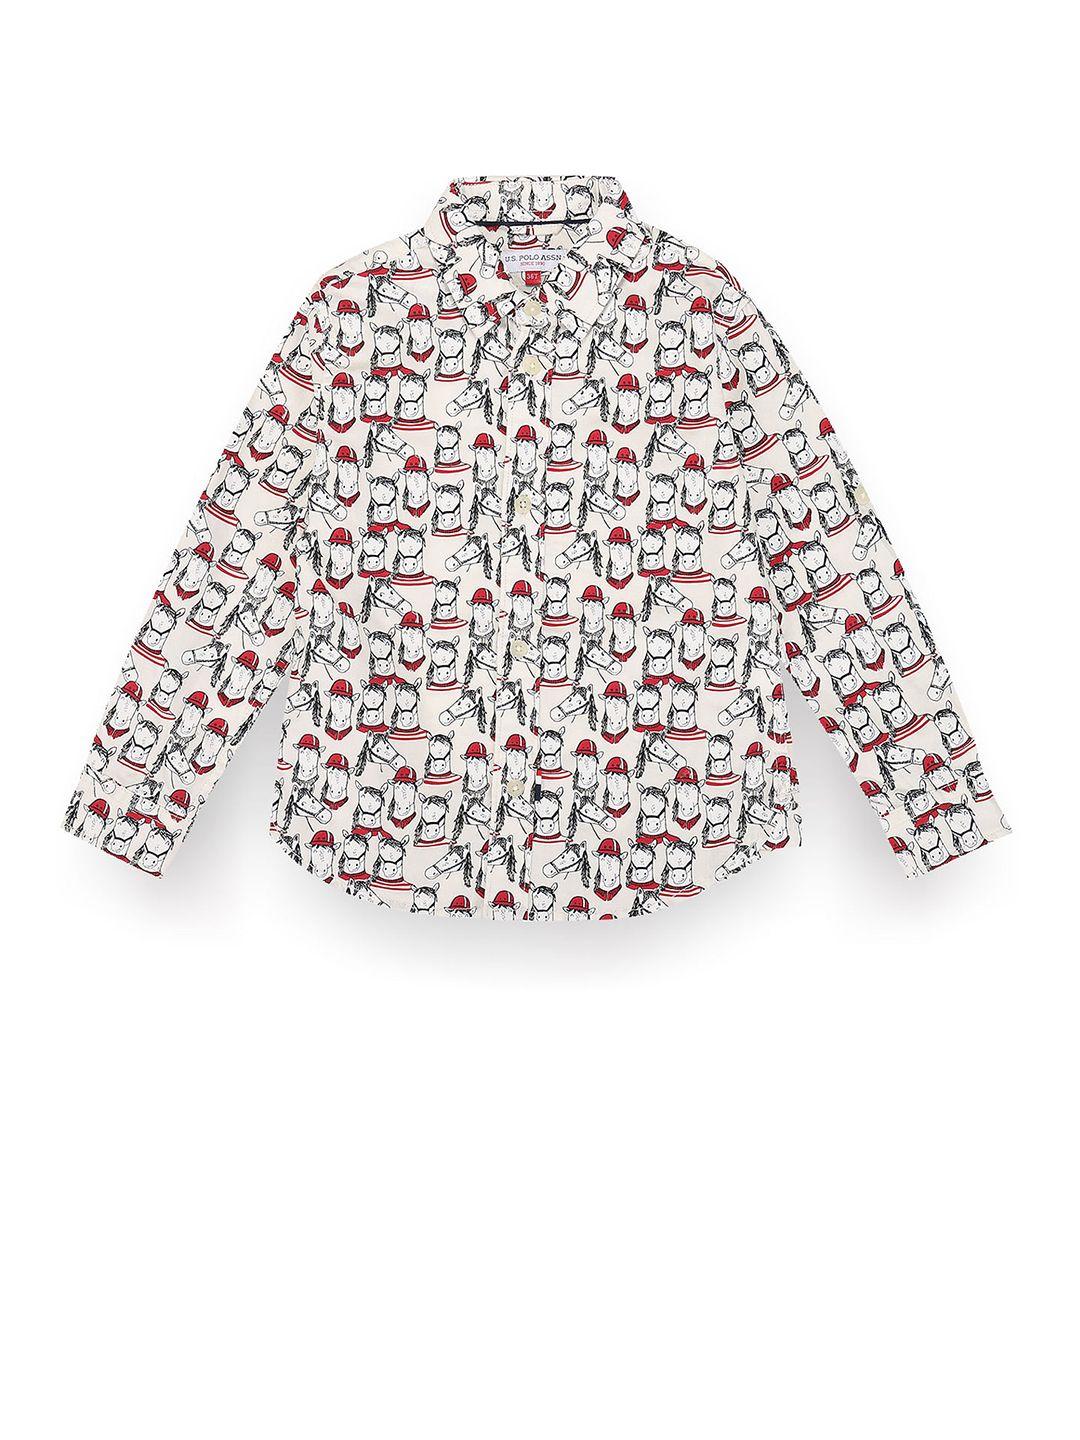 u.s. polo assn. kids boys conversational printed classic twill pure cotton casual shirt